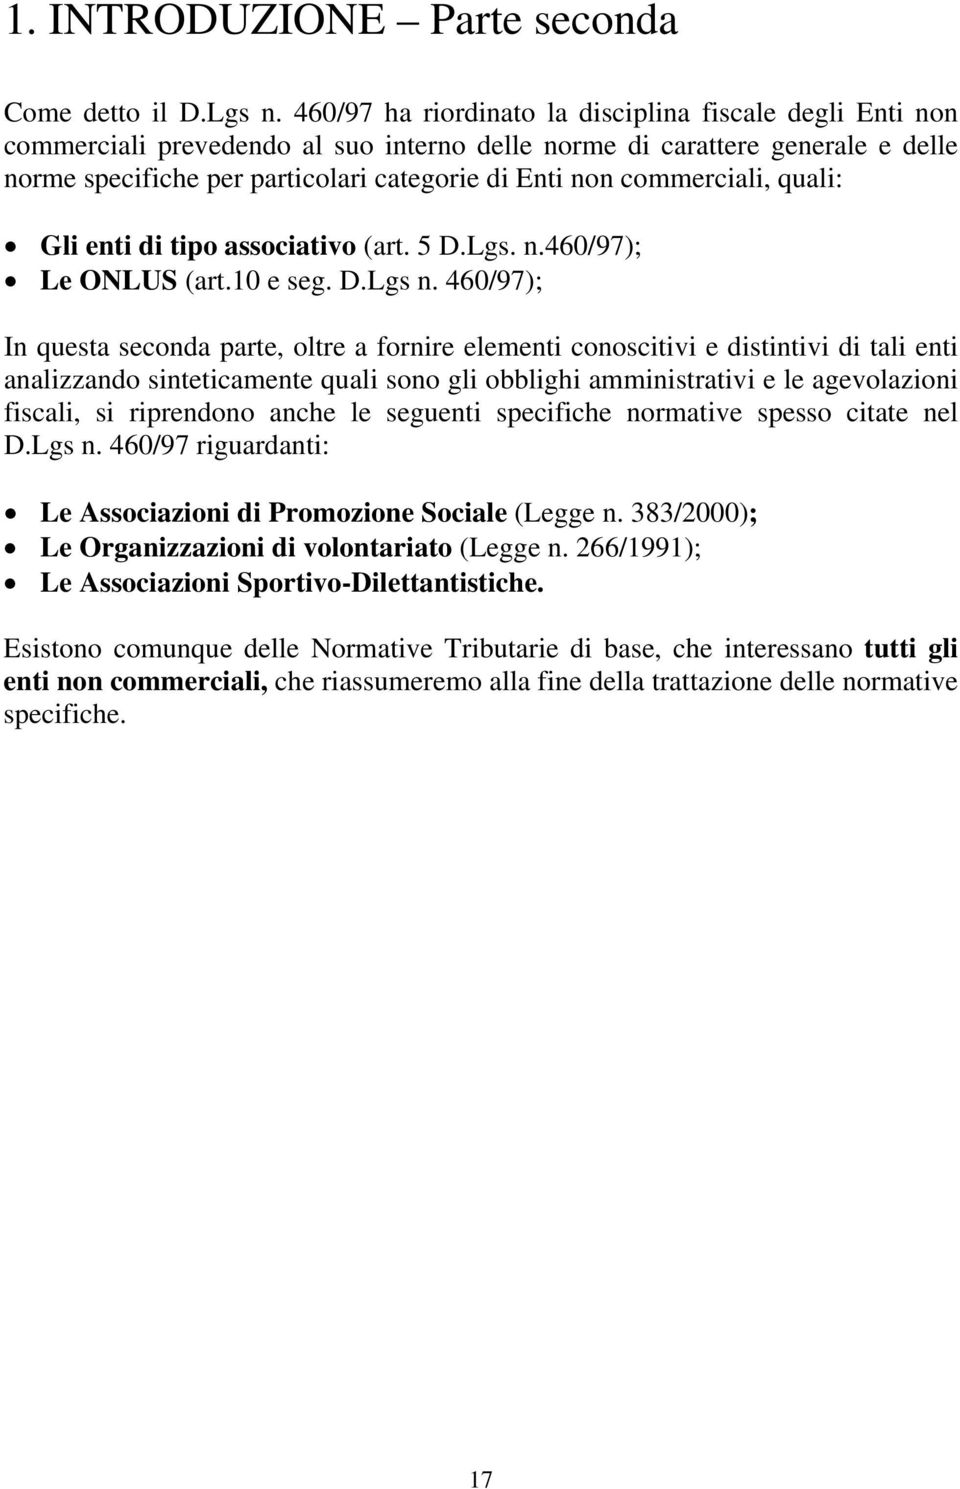 commerciali, quali: Gli enti di tipo associativo (art. 5 D.Lgs. n.460/97); Le ONLUS (art.10 e seg. D.Lgs n.